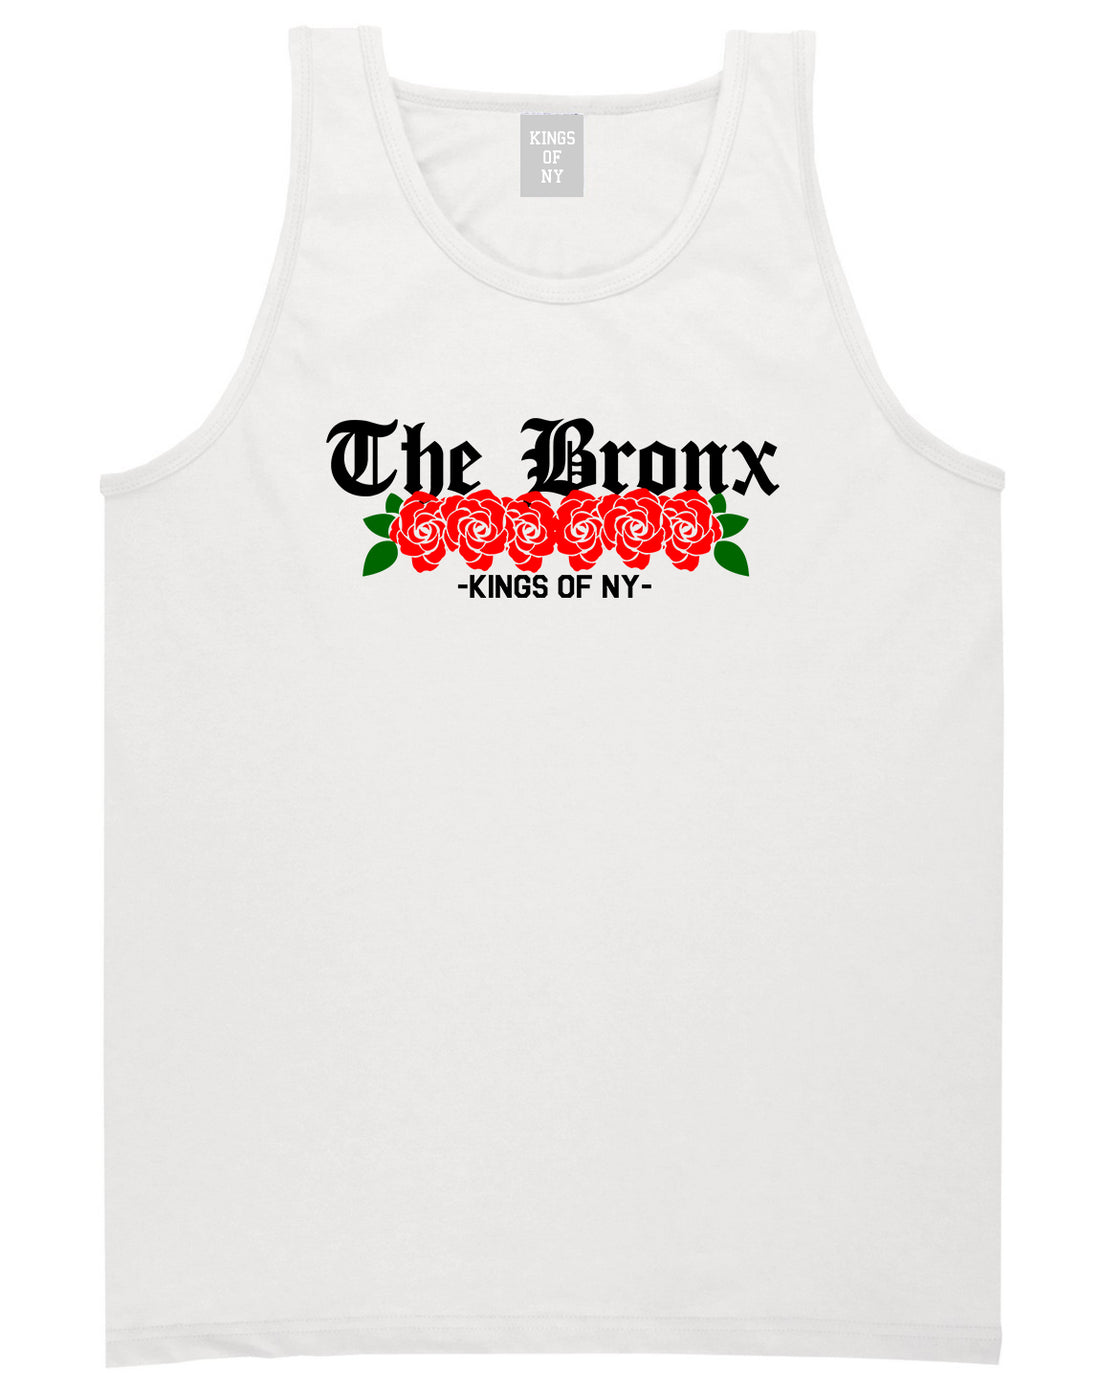 The Bronx Roses Kings Of NY Mens Tank Top T-Shirt White